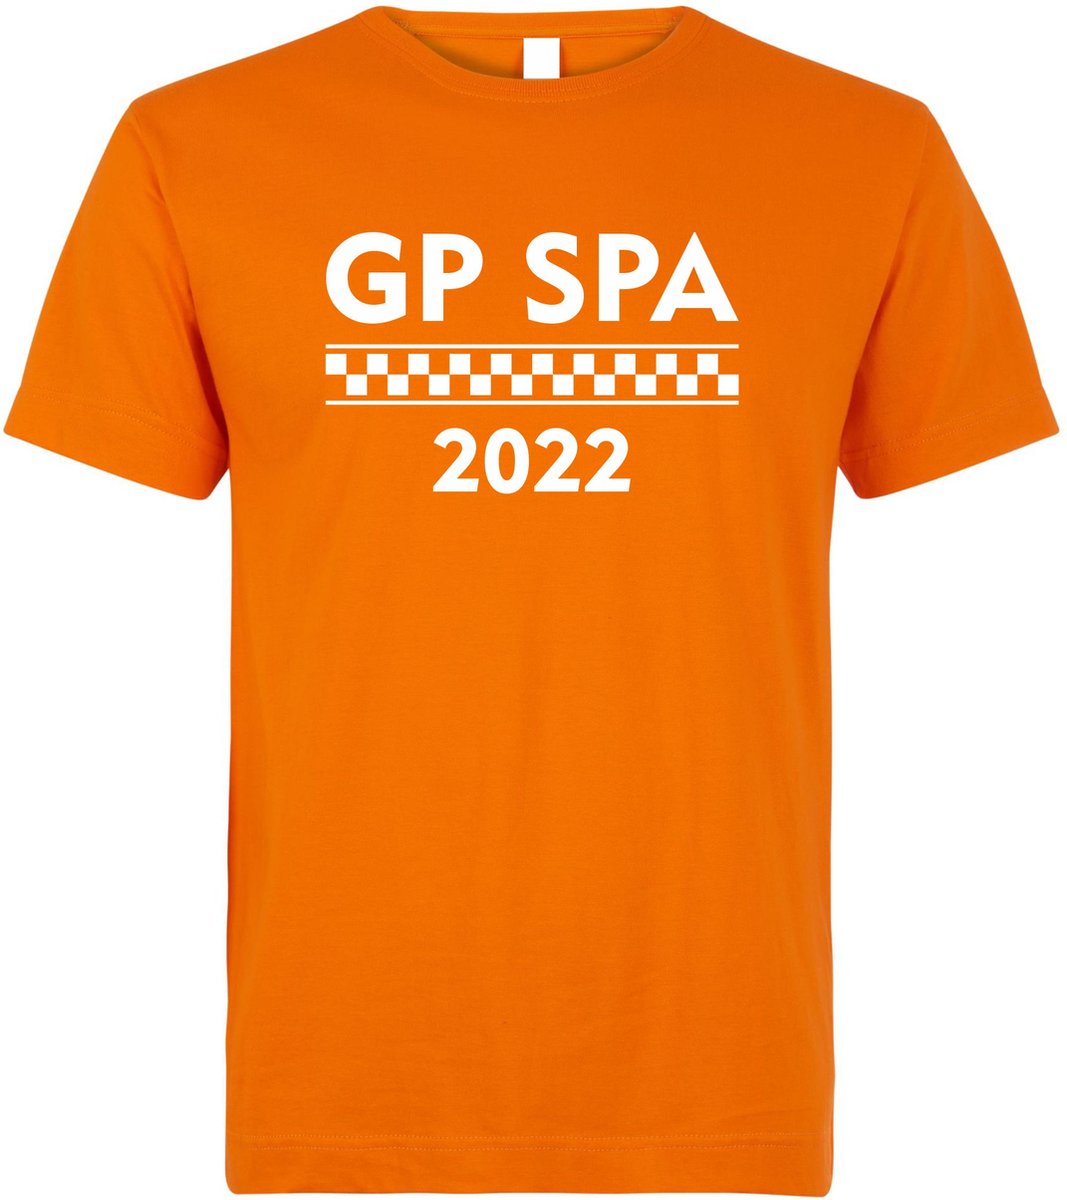 T-shirt kinderen GP Spa 2022 | Max Verstappen / Red Bull Racing / Formule 1 fan | Grand Prix Circuit Spa-Francorchamps | kleding shirt | Oranje | maat 68